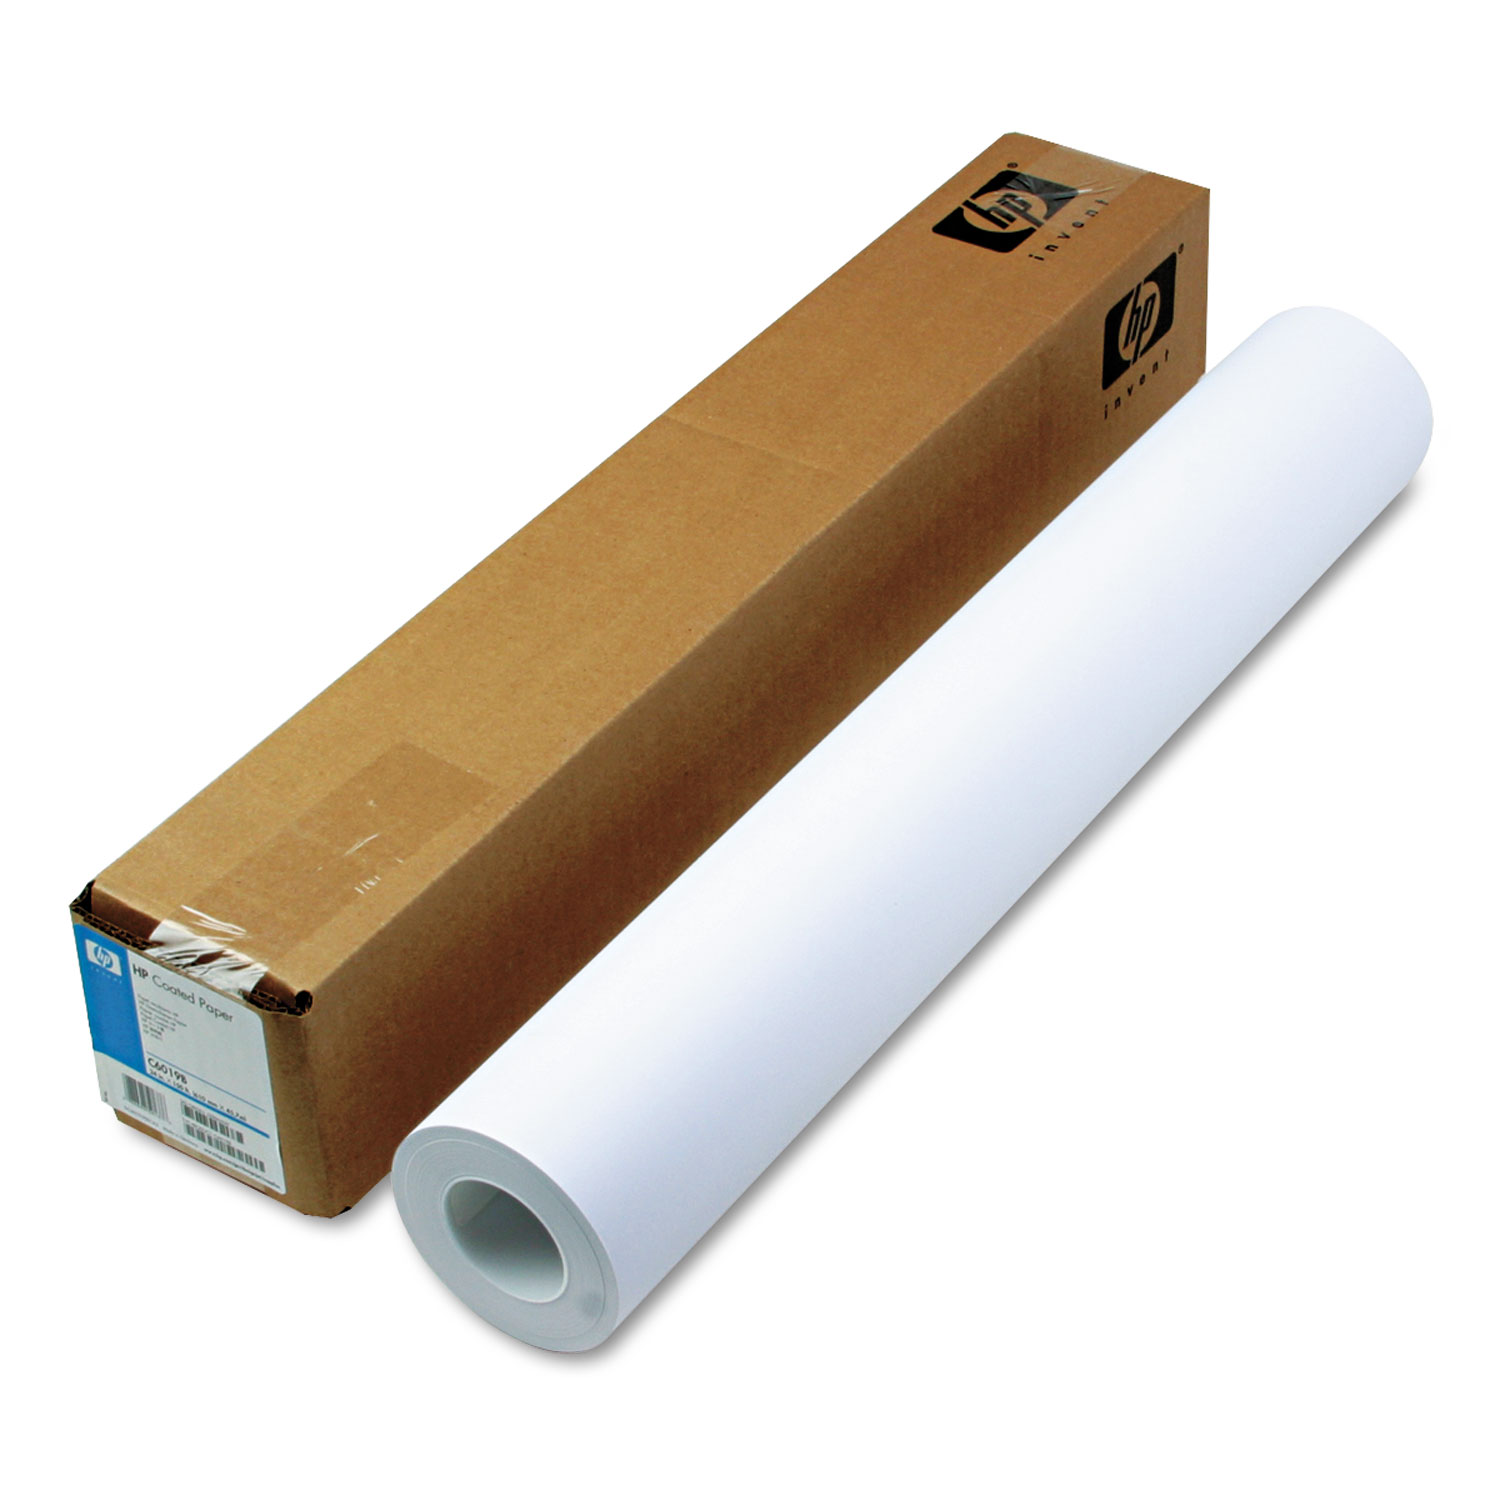  HP C6019B DesignJet Inkjet Large Format Paper, 4.5 mil, 24 x 150 ft, Coated White (HEWC6019B) 